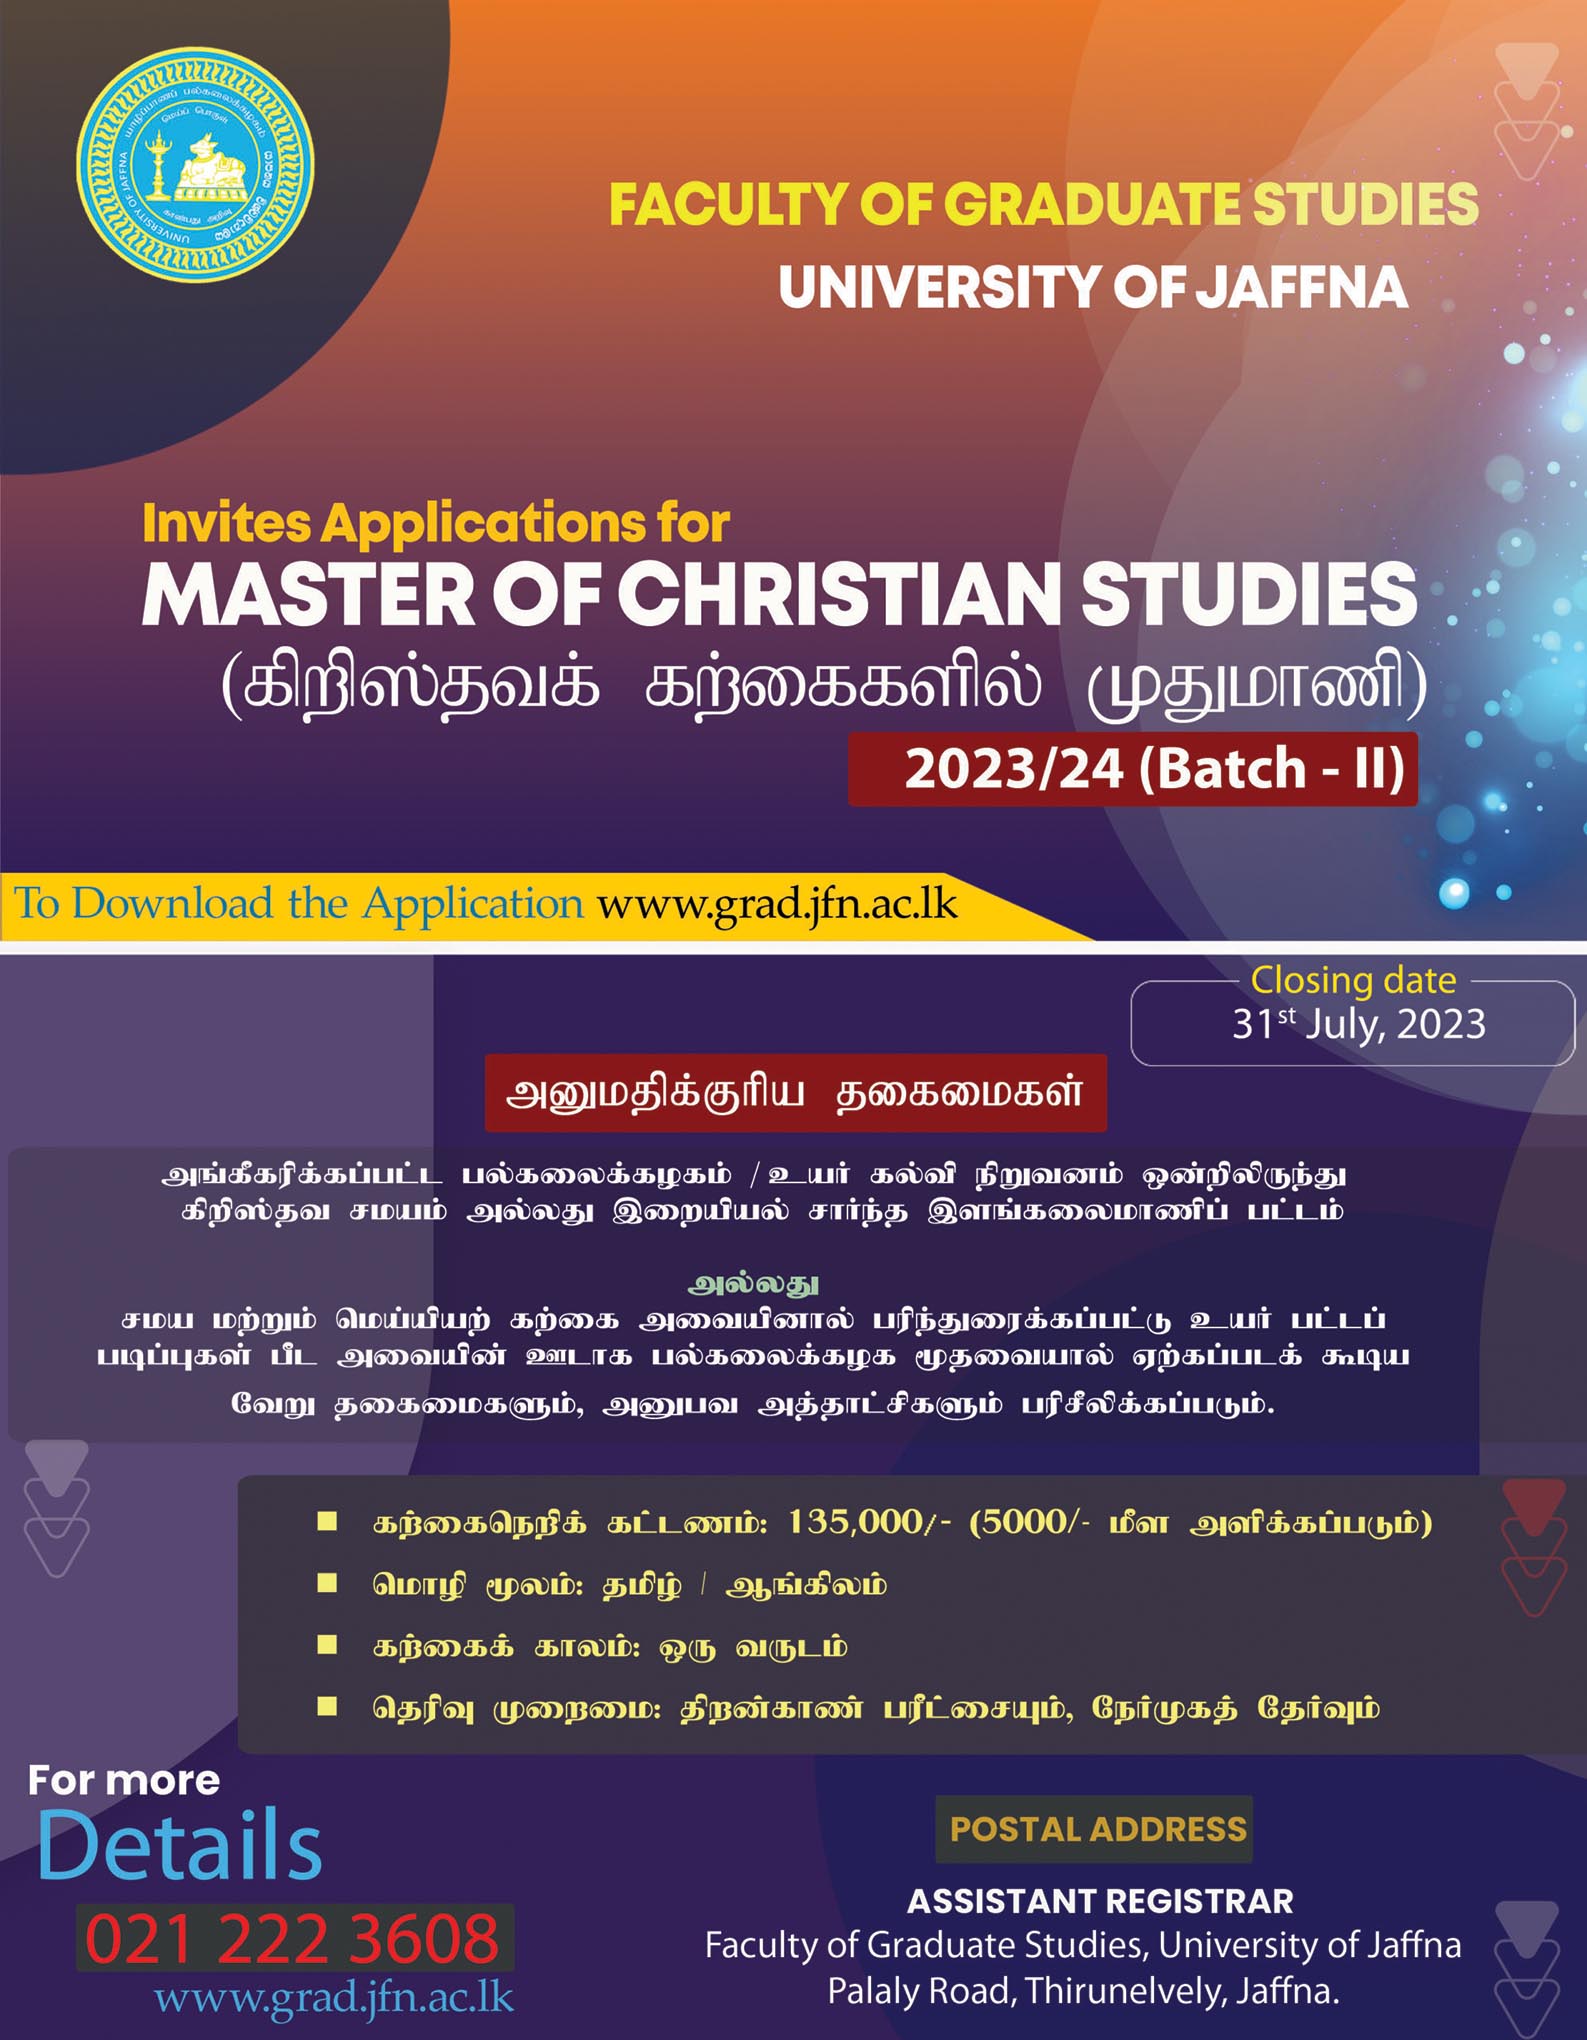 Master of Christian Studies 2023/24 - University of Jaffna